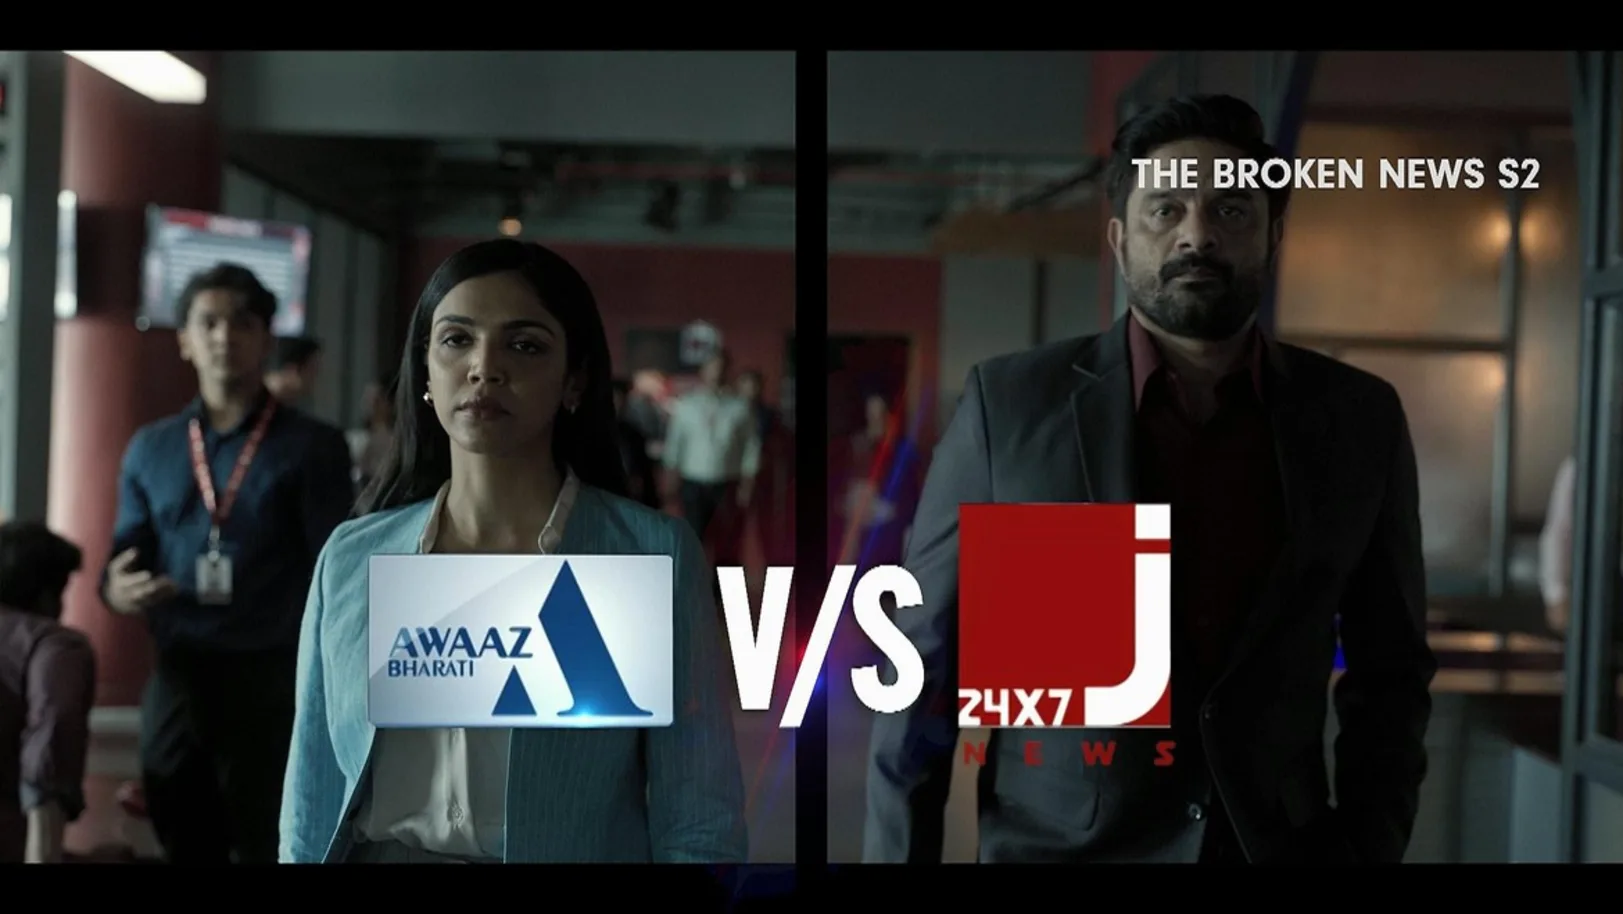 The Broken News S2 | Awaaz Bharti Vs Josh 24x7| Promo